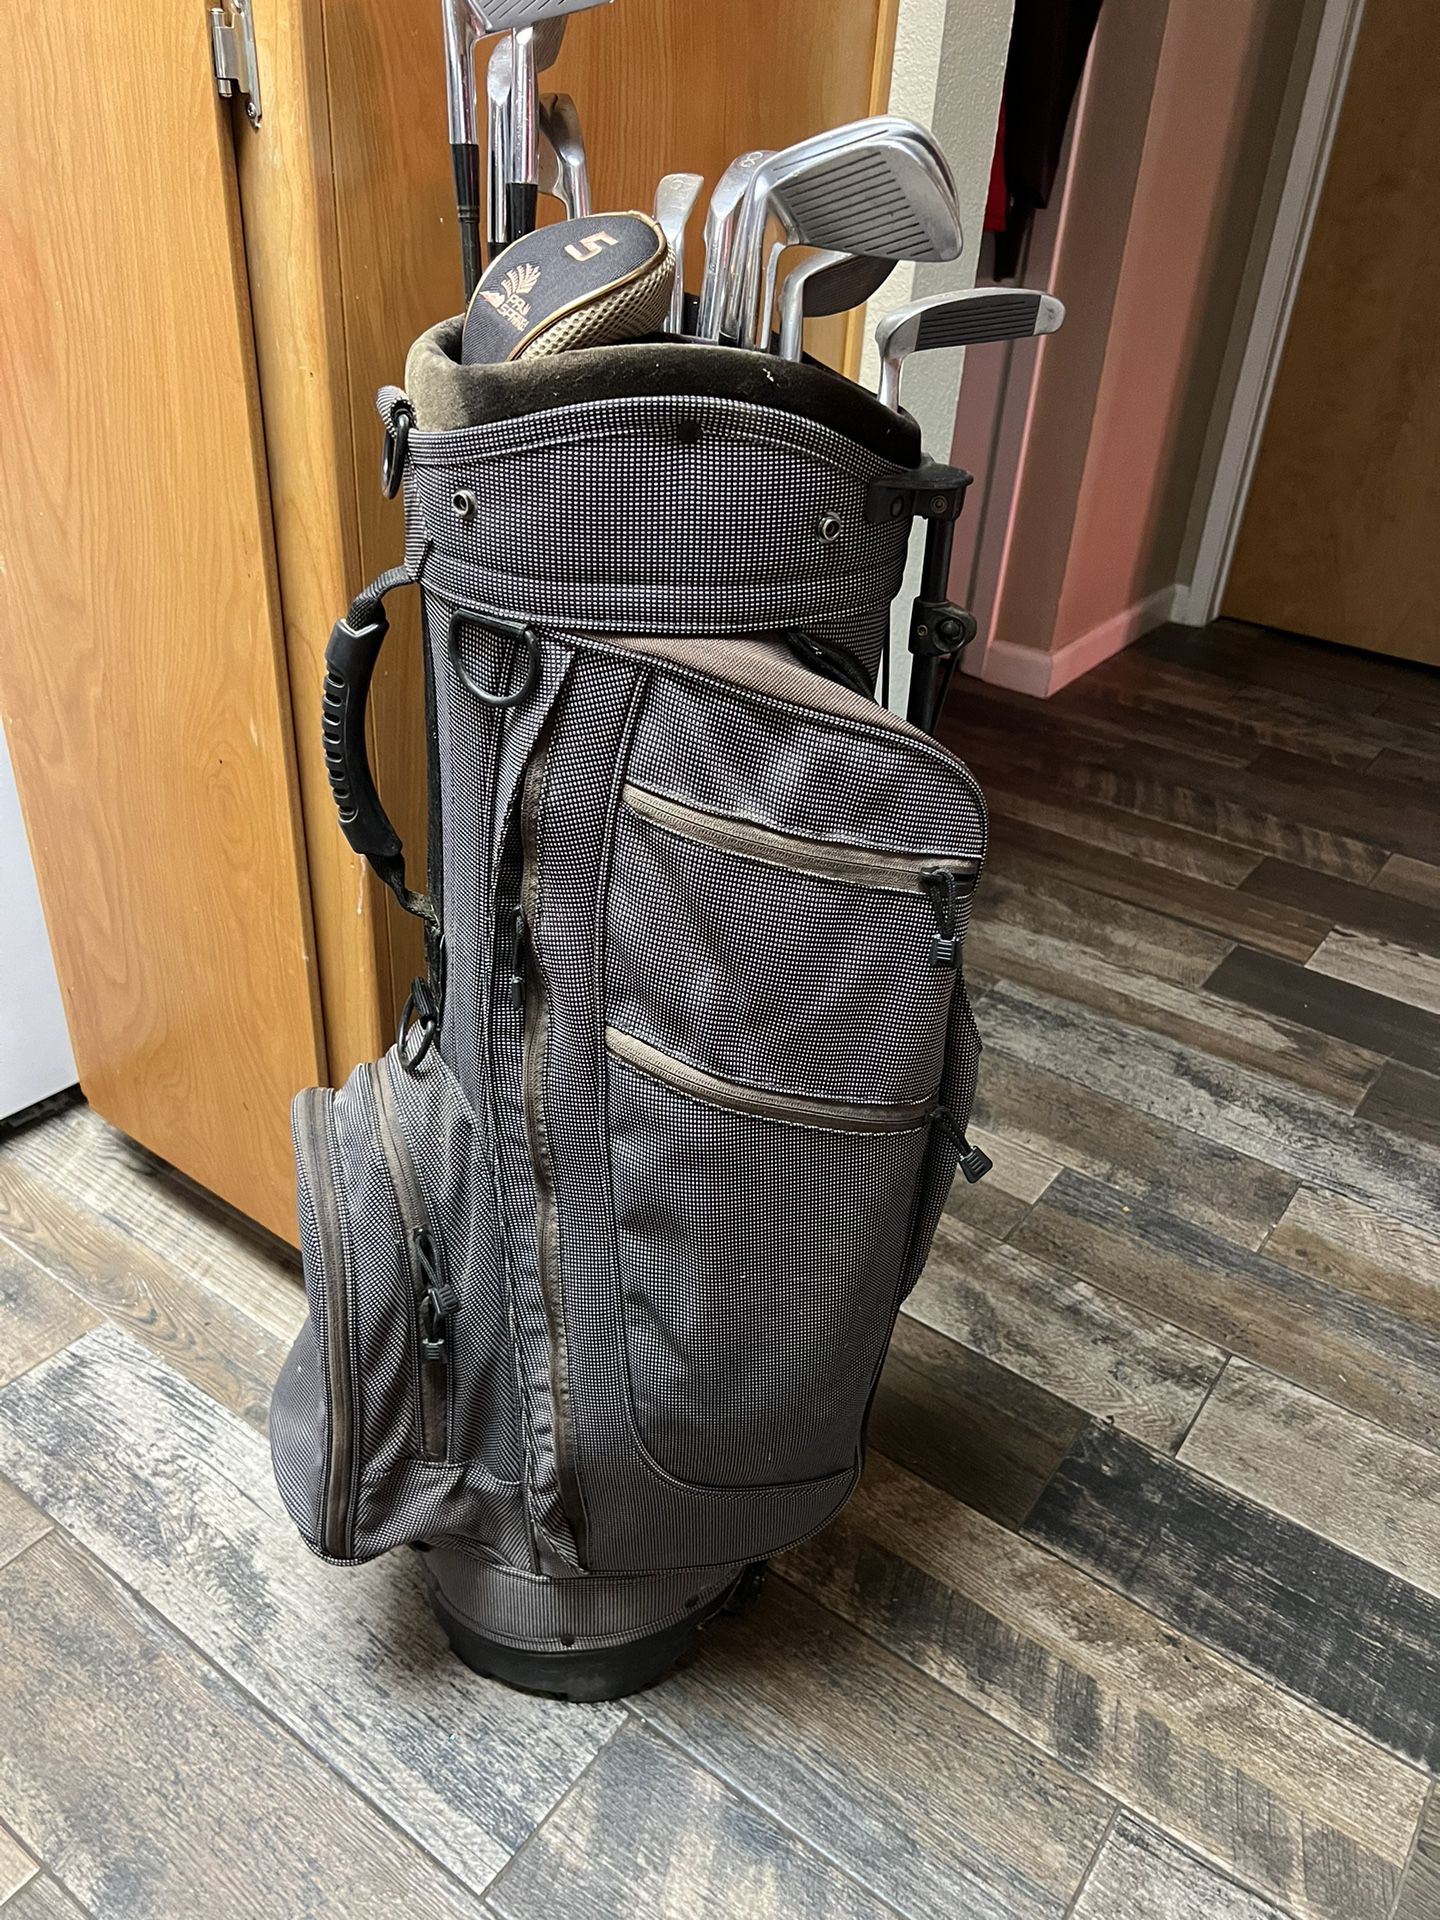 Nice Jones Golf Bag With Many Clubs